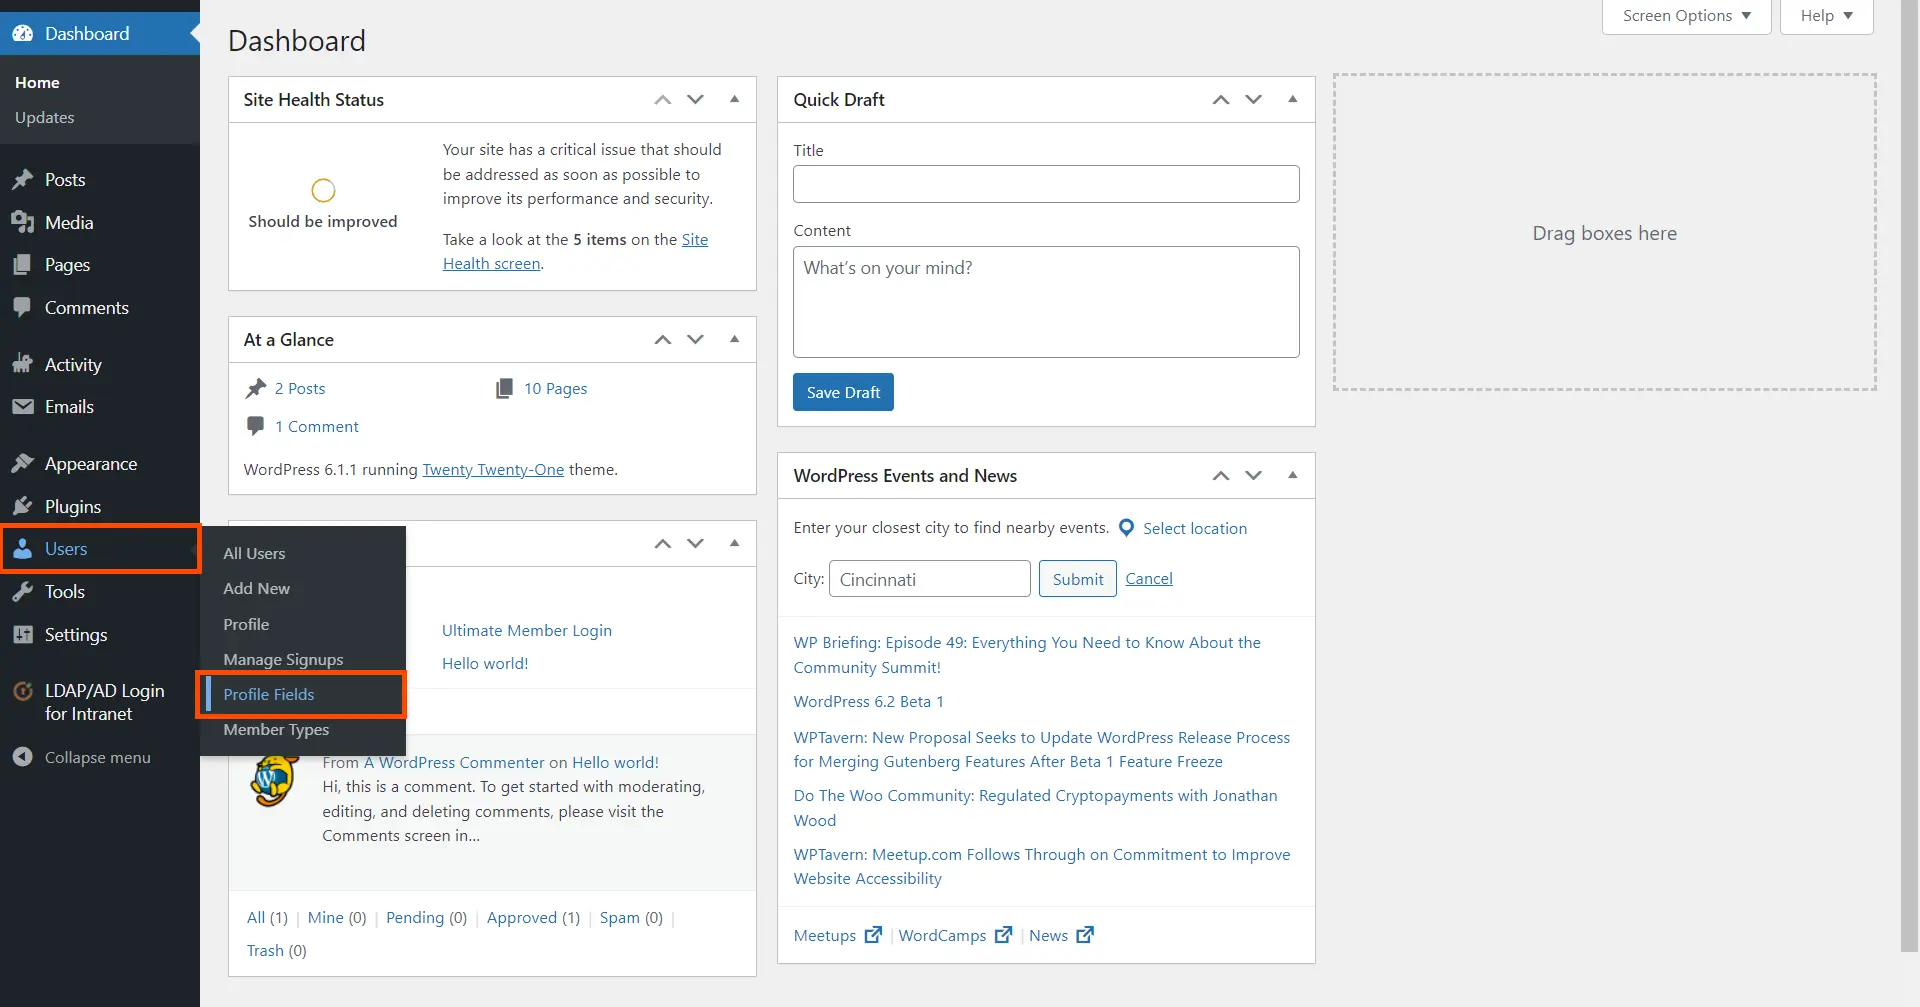 BuddyPress profile integration profile fields section